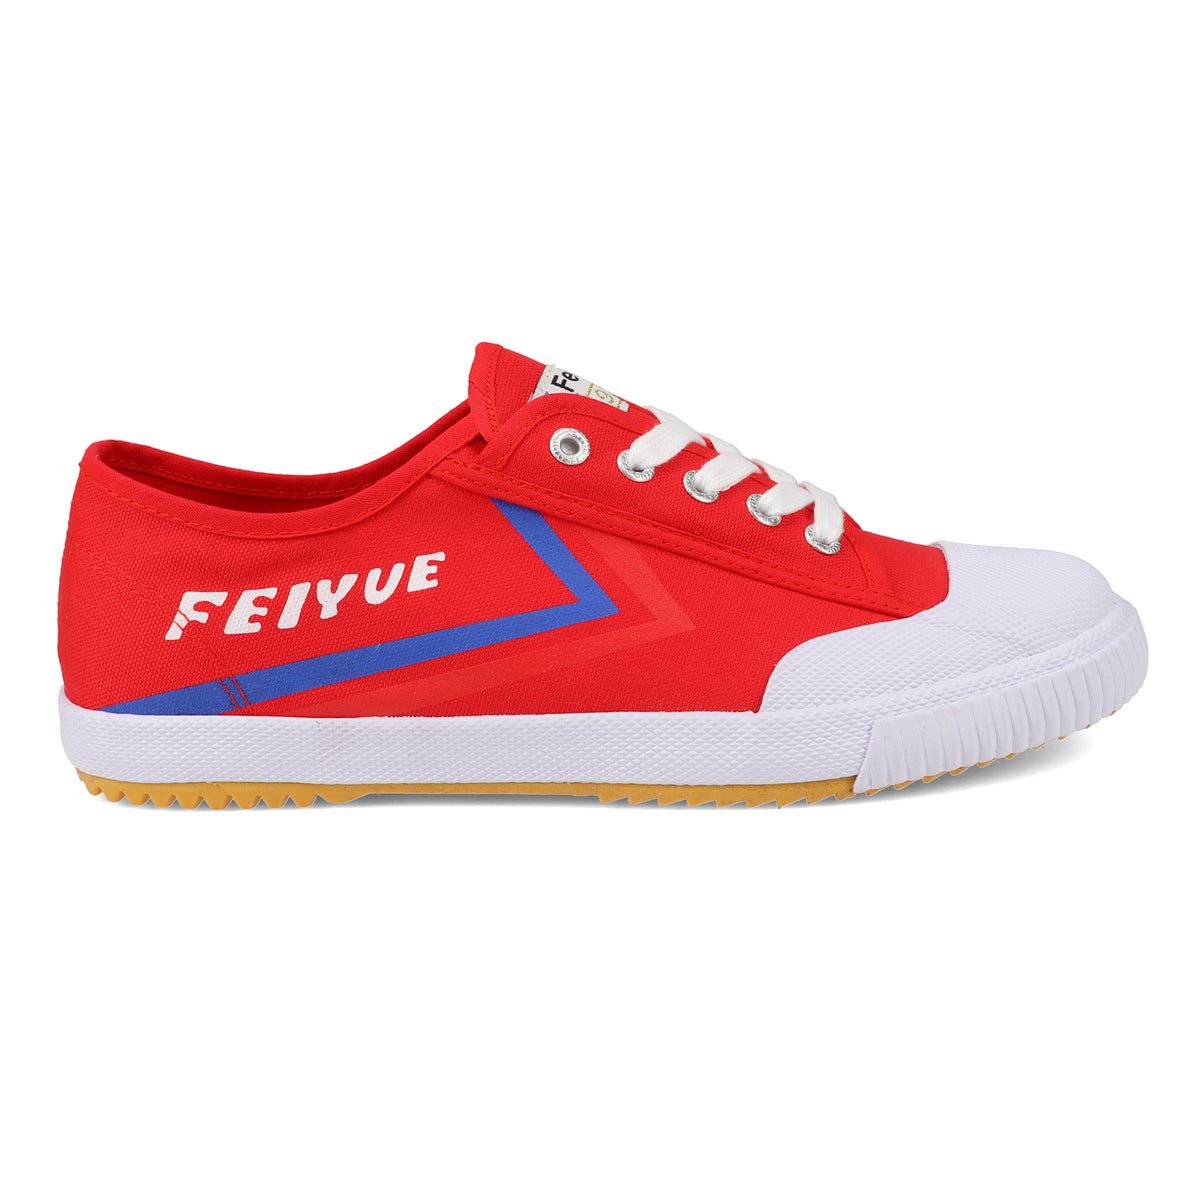  Feiyue Unisex Training Men's Martial Arts Shoes, Ivory Blue  Red, 7 US